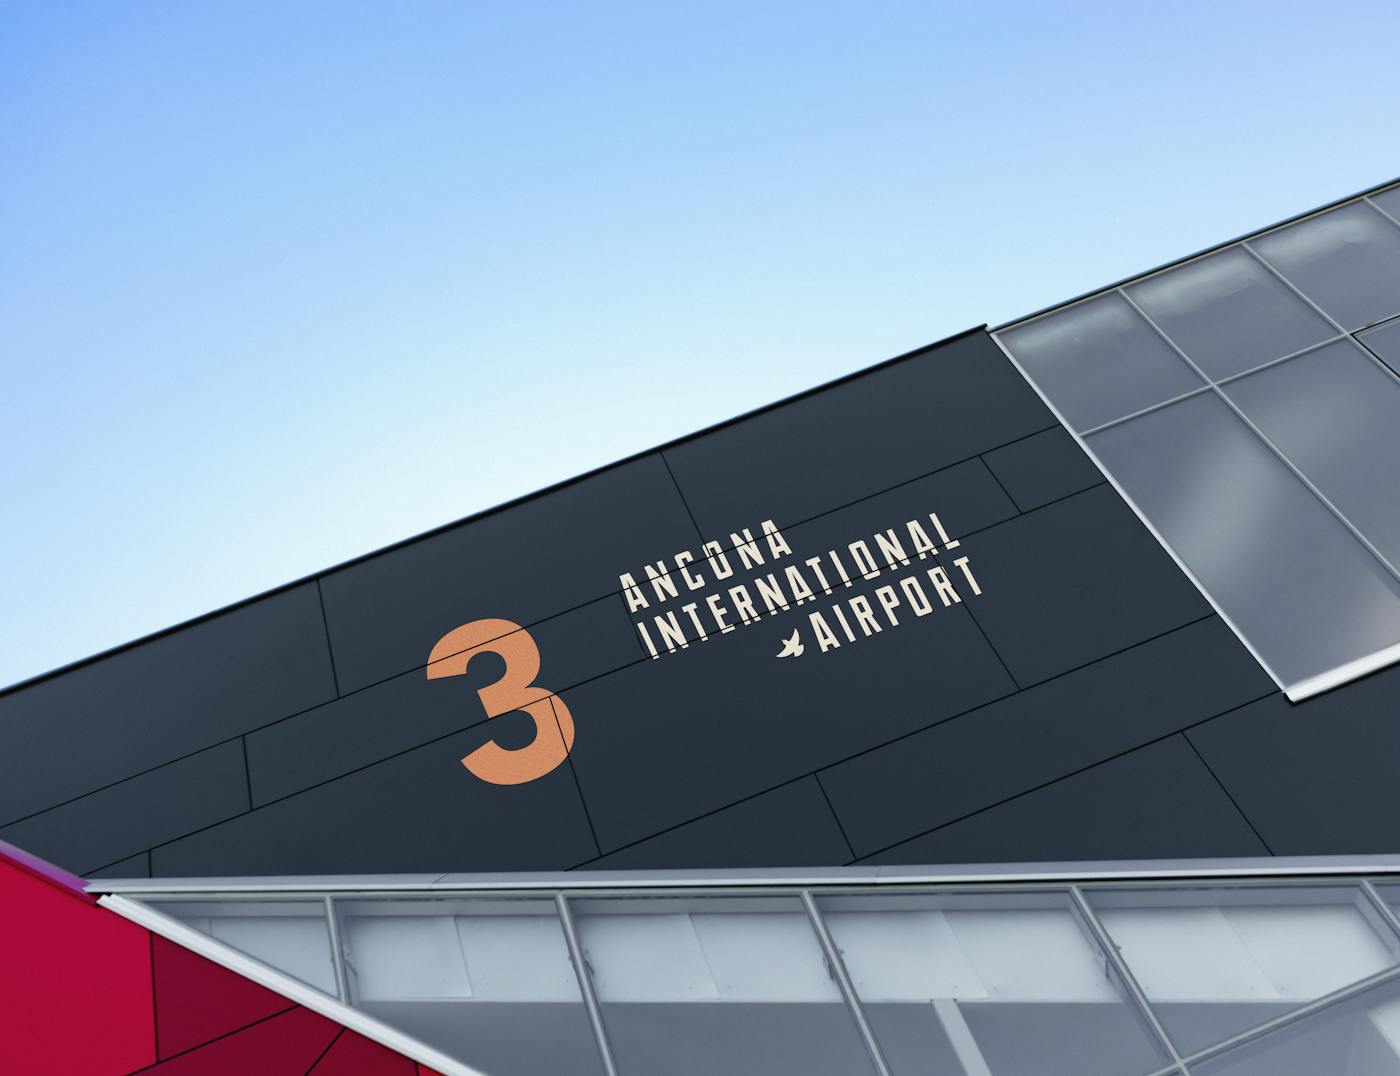 5 A Ancona International Airport building mockup3